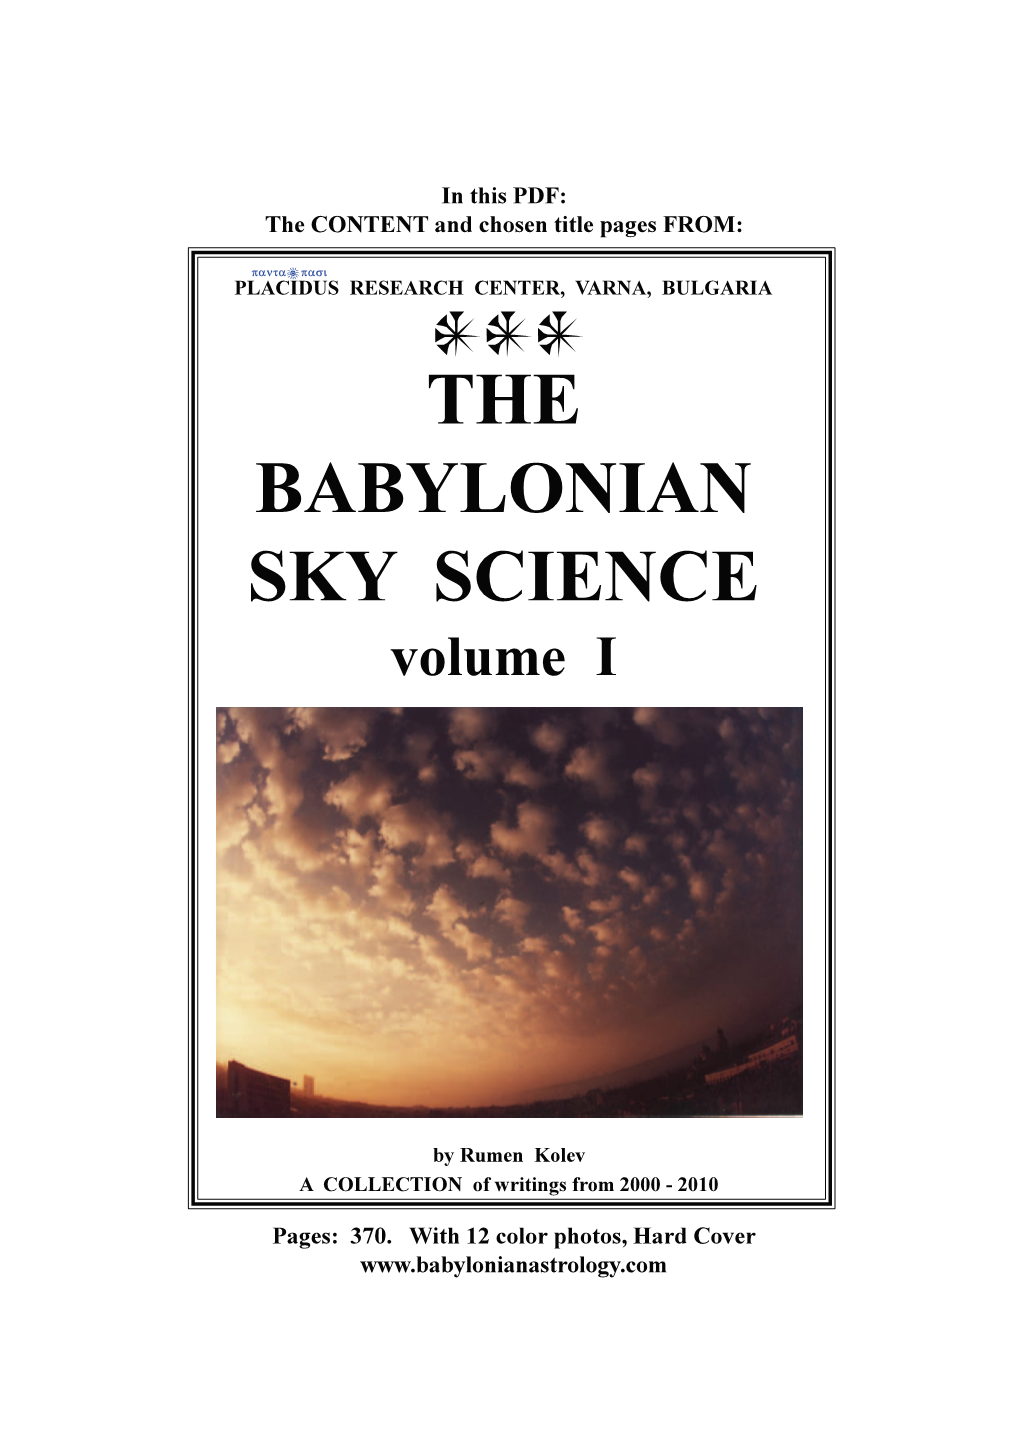 THE BABYLONIAN SKY SCIENCE Volume I